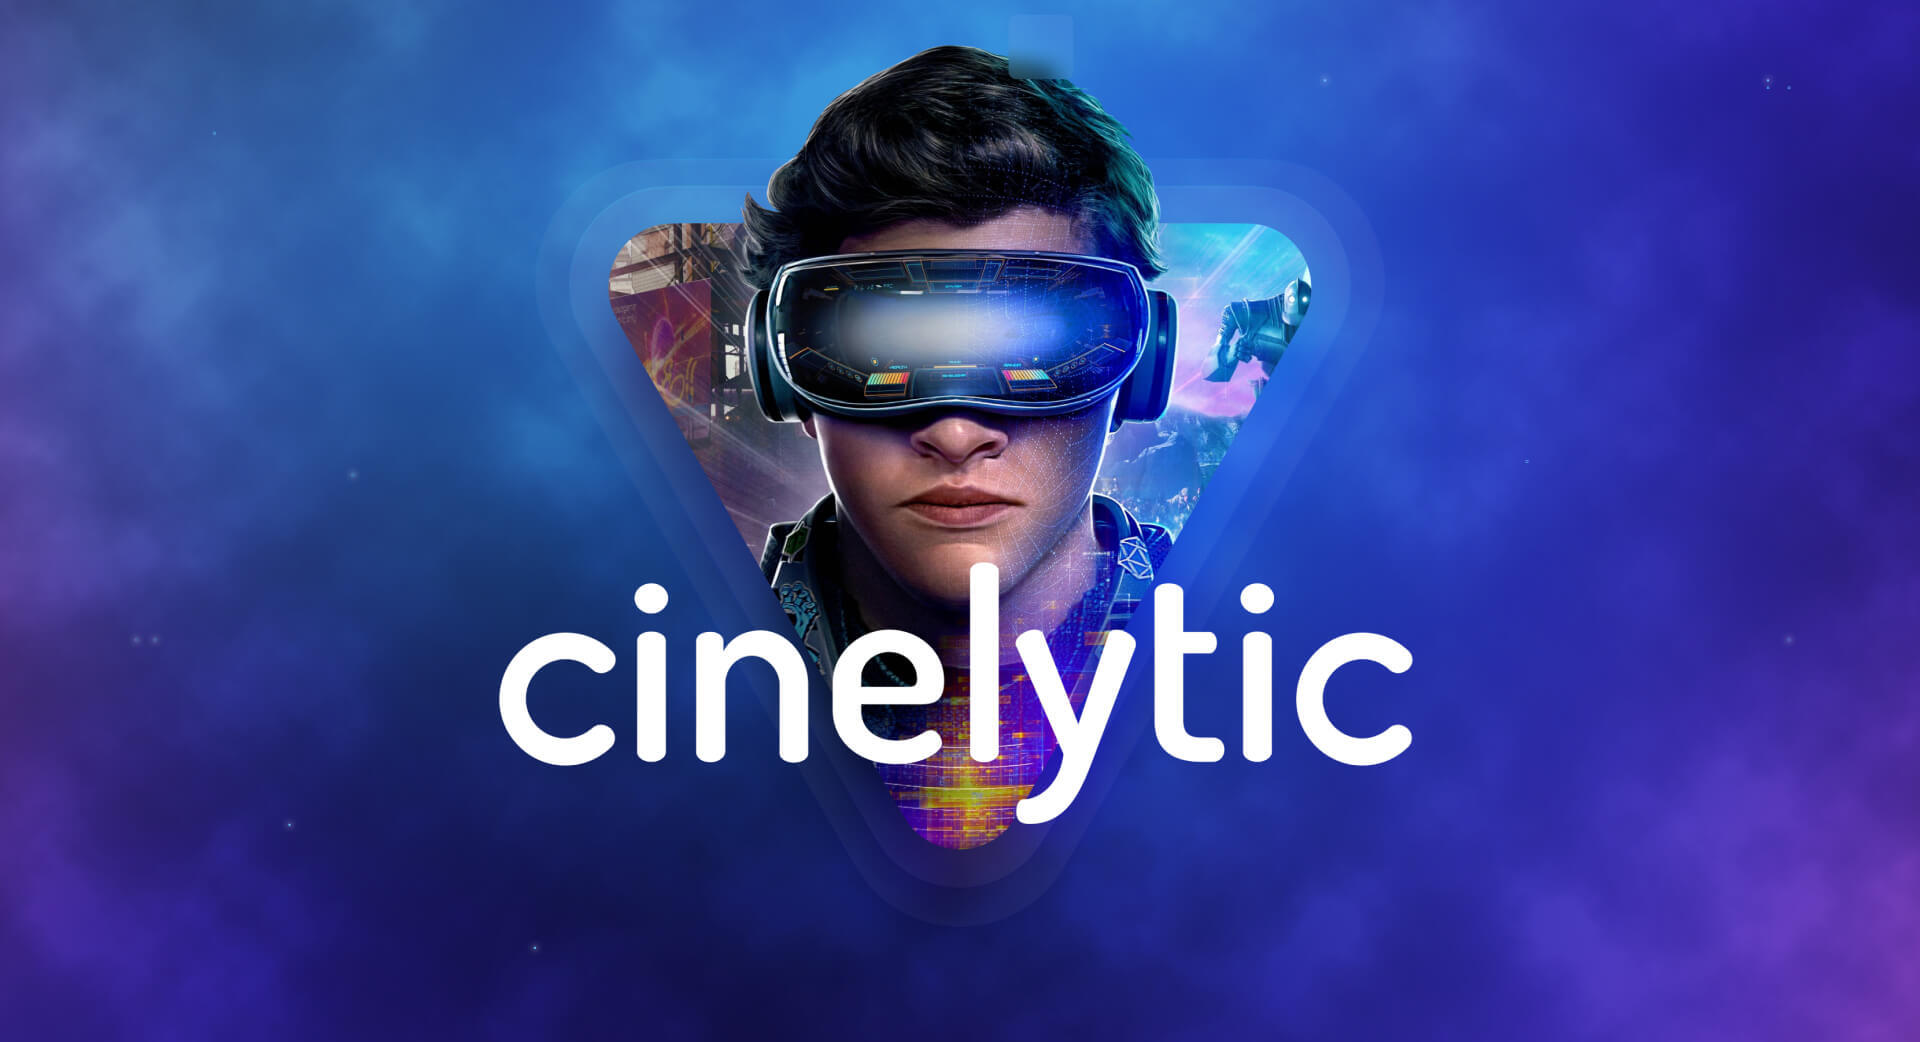 Cinelytic